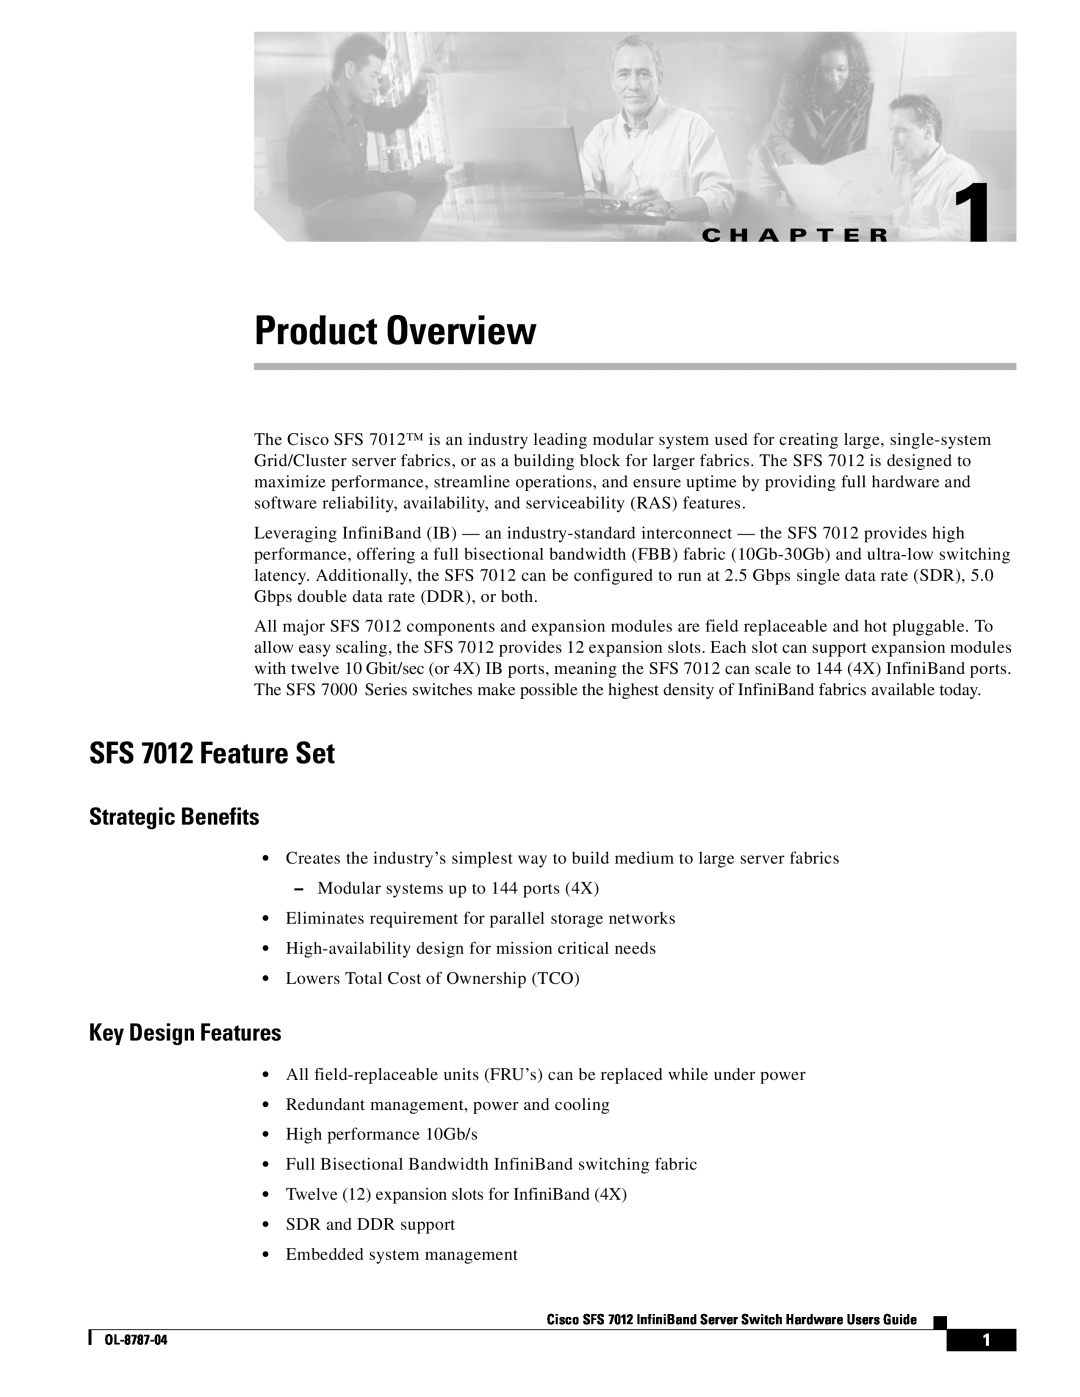 Cisco Systems manual Product Overview, SFS 7012 Feature Set, Strategic Benefits, Key Design Features, C H A P T E R 